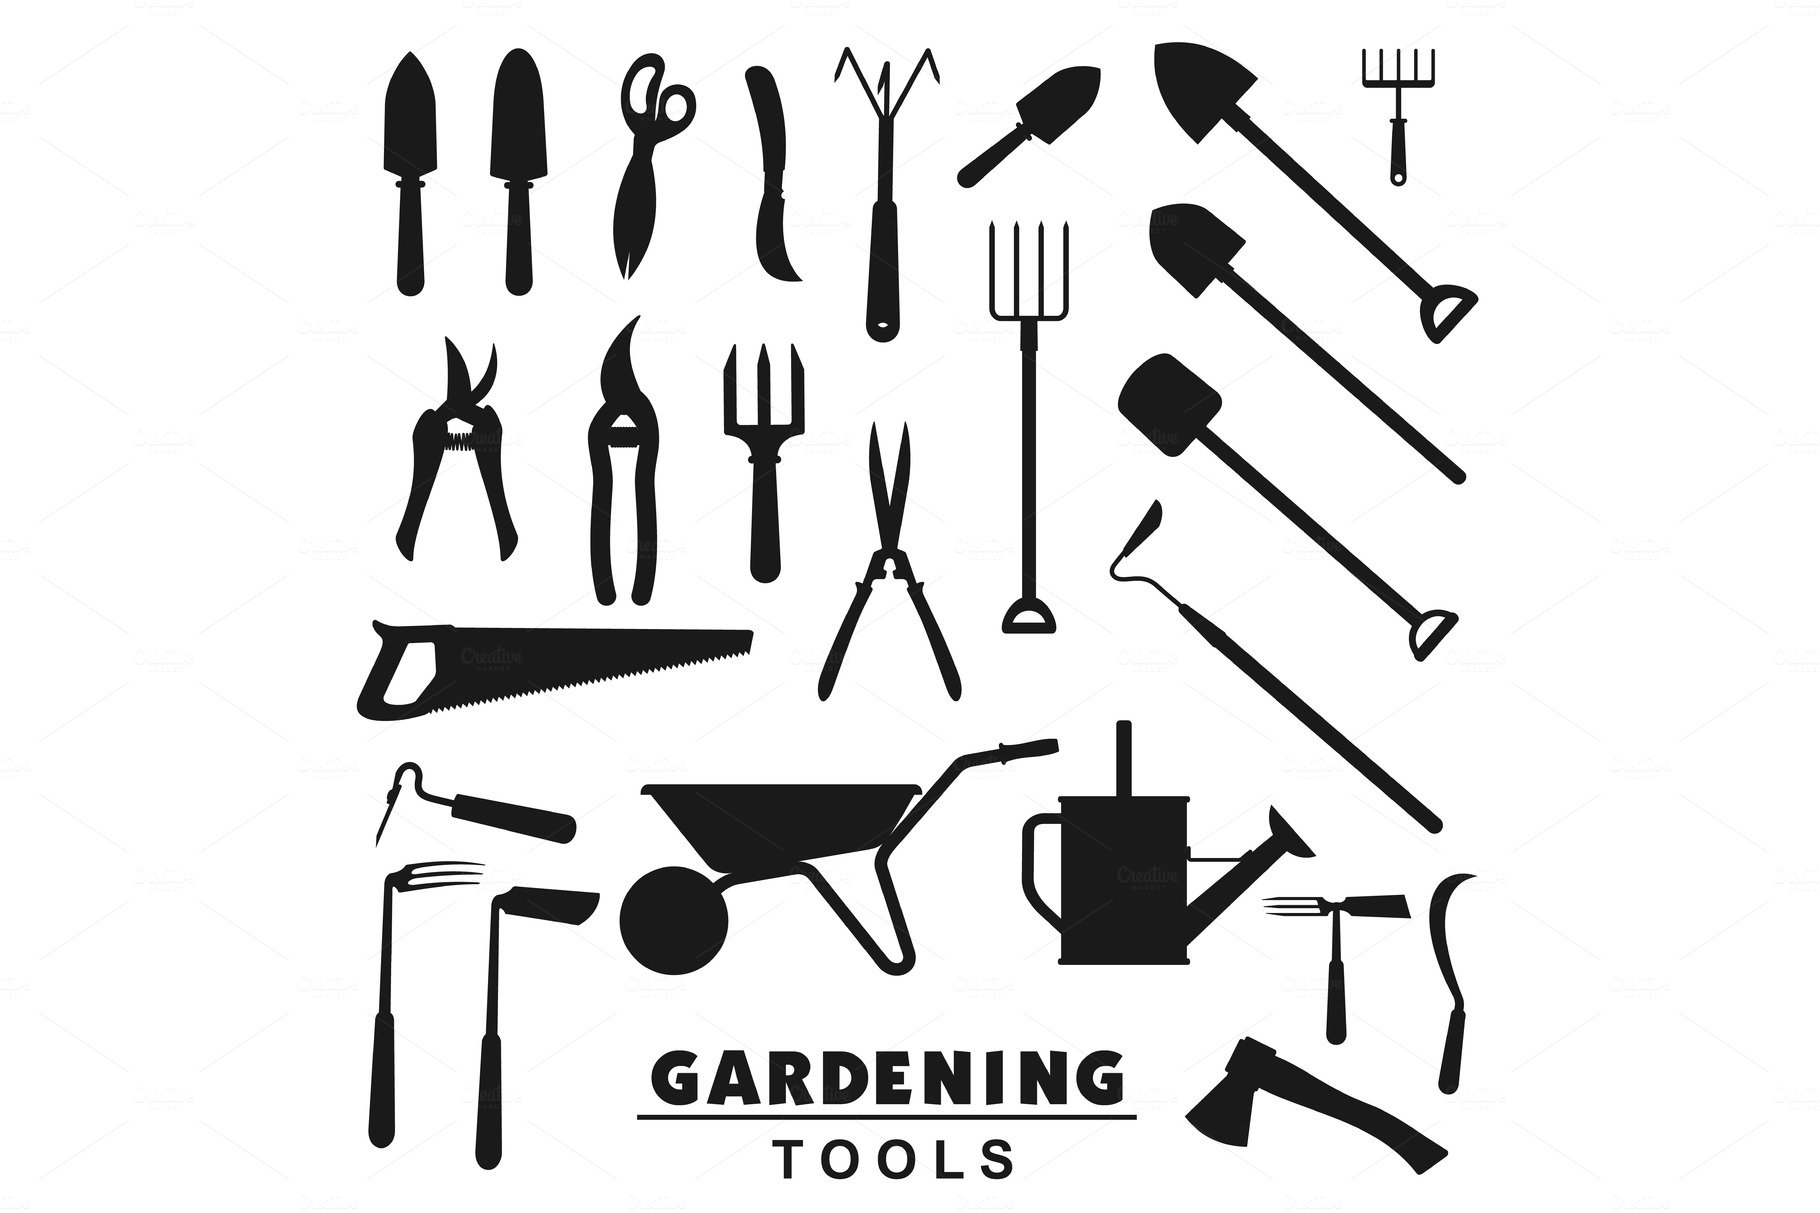 Gardening tools, equipment cover image.